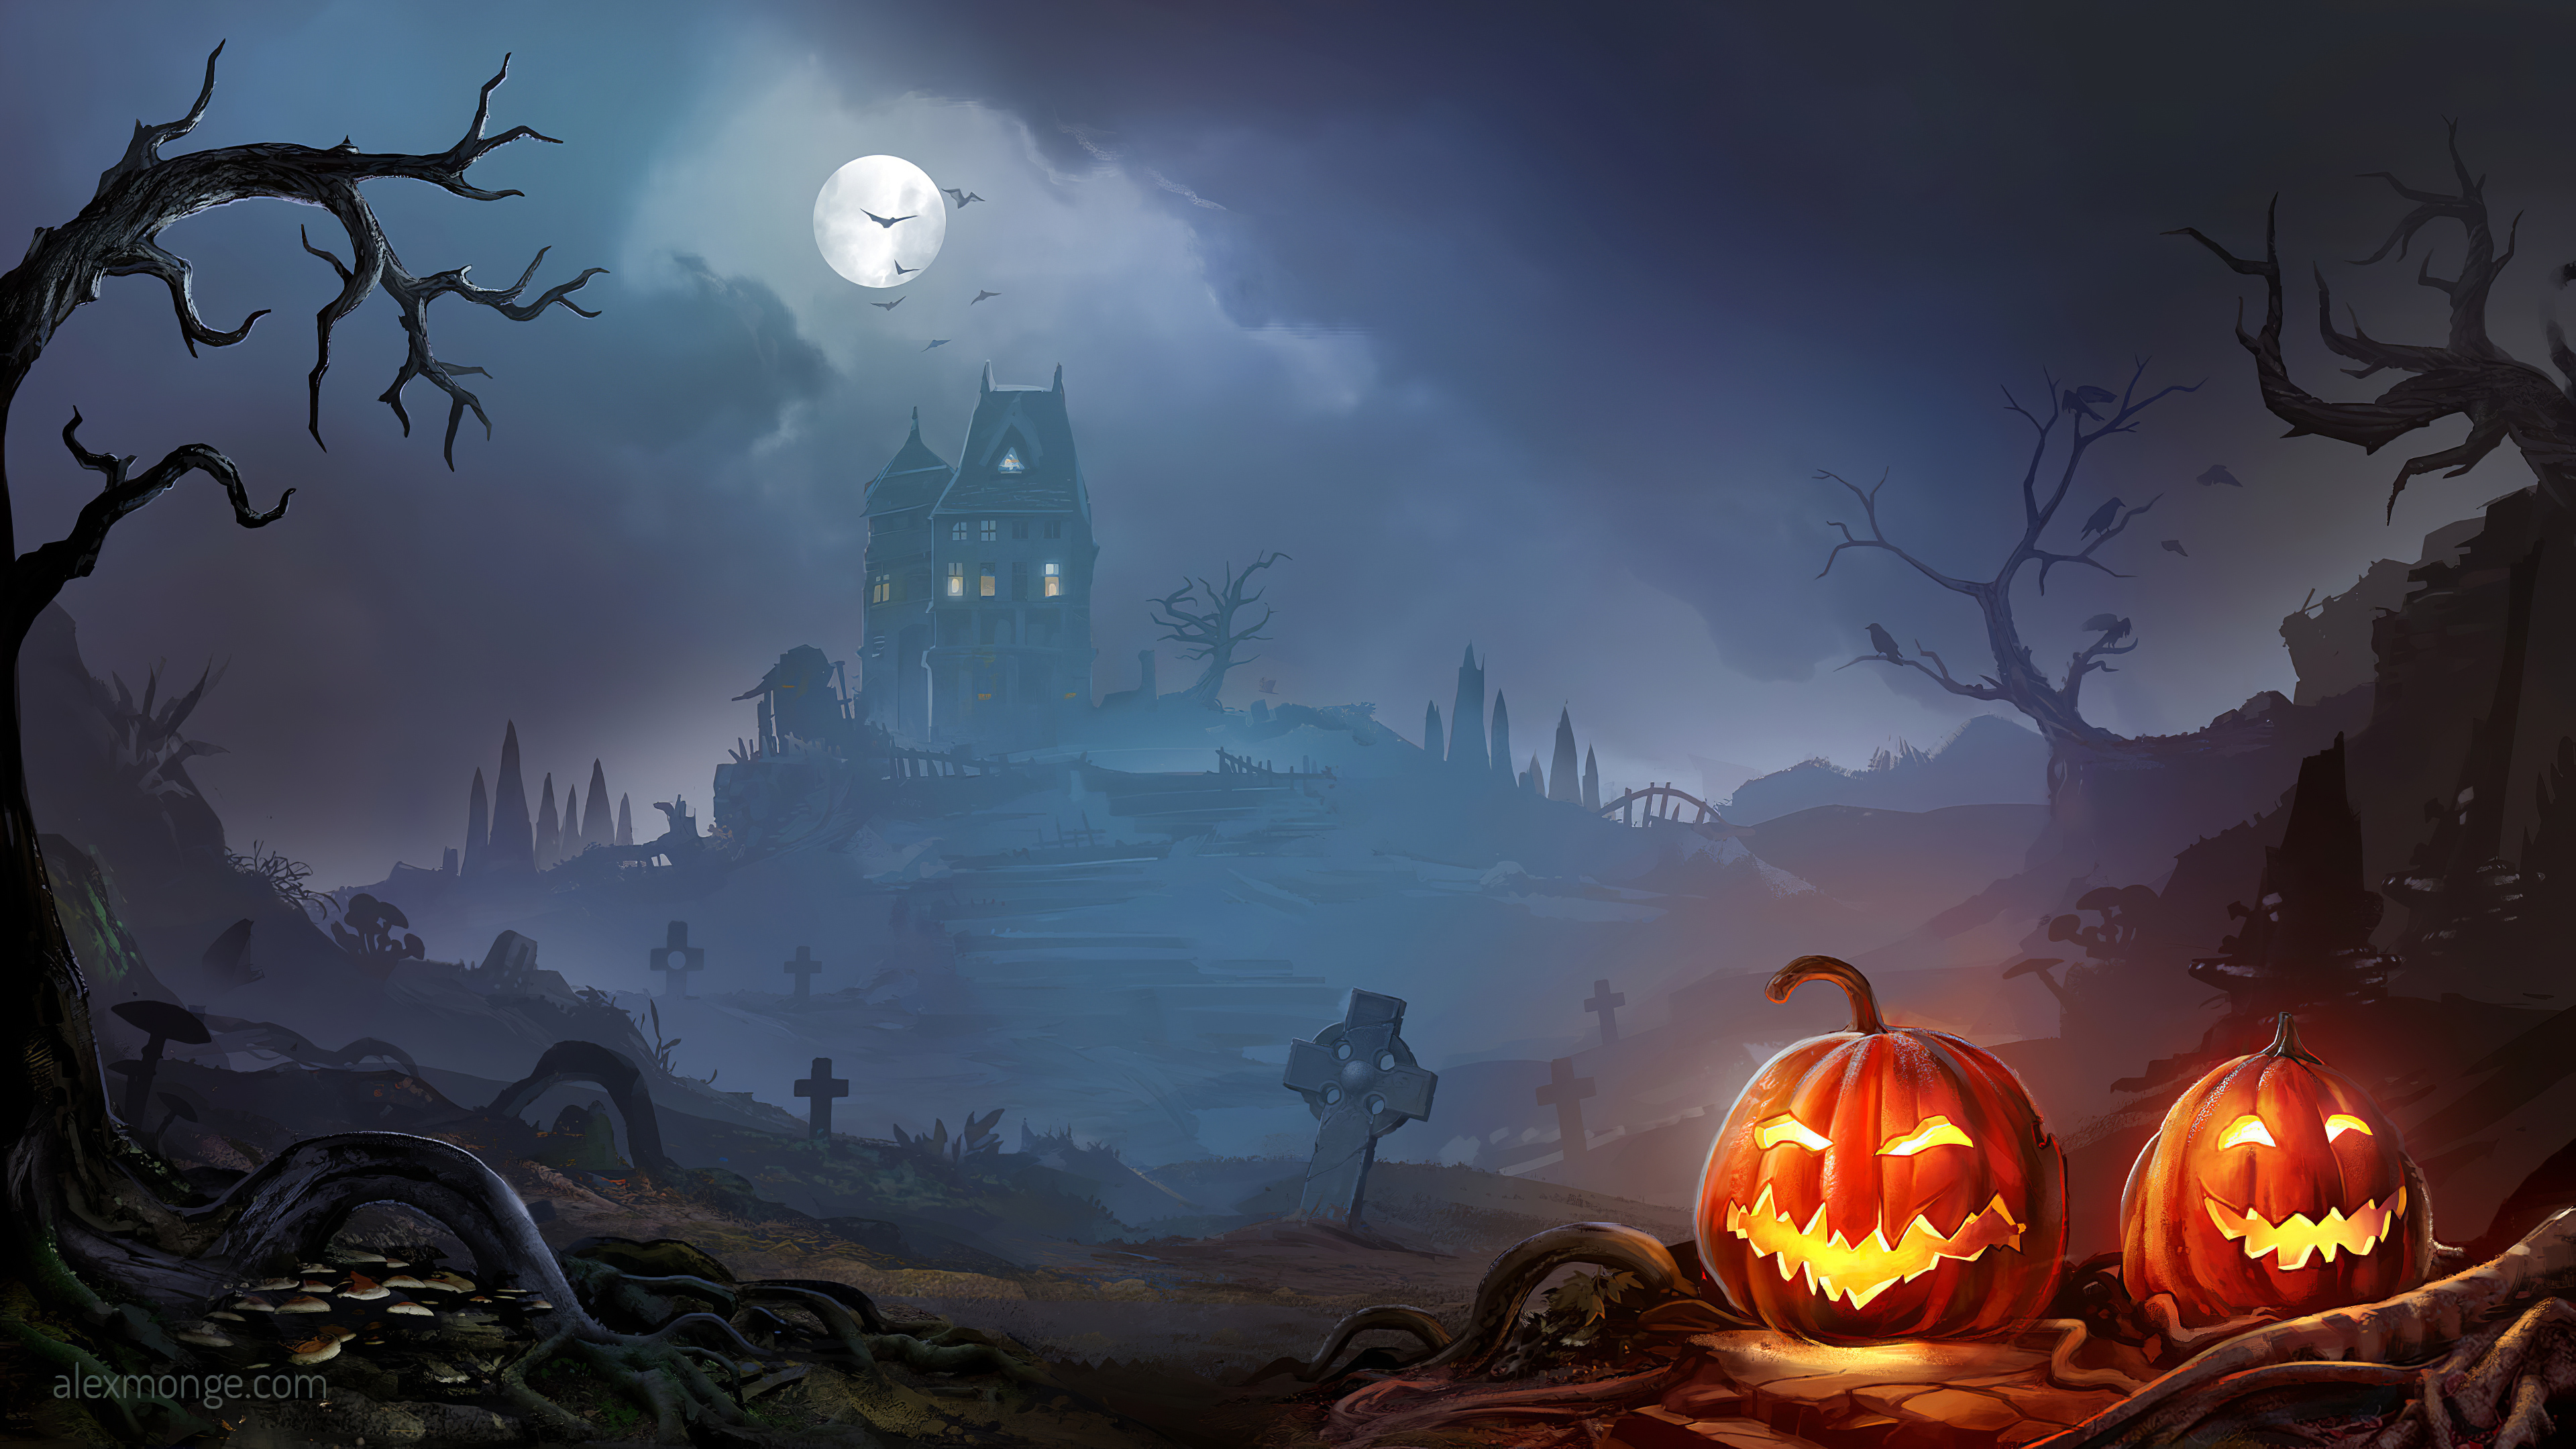 Horror Pumpkins Halloween 4k, HD Artist, 4k Wallpaper, Image, Background, Photo and Picture